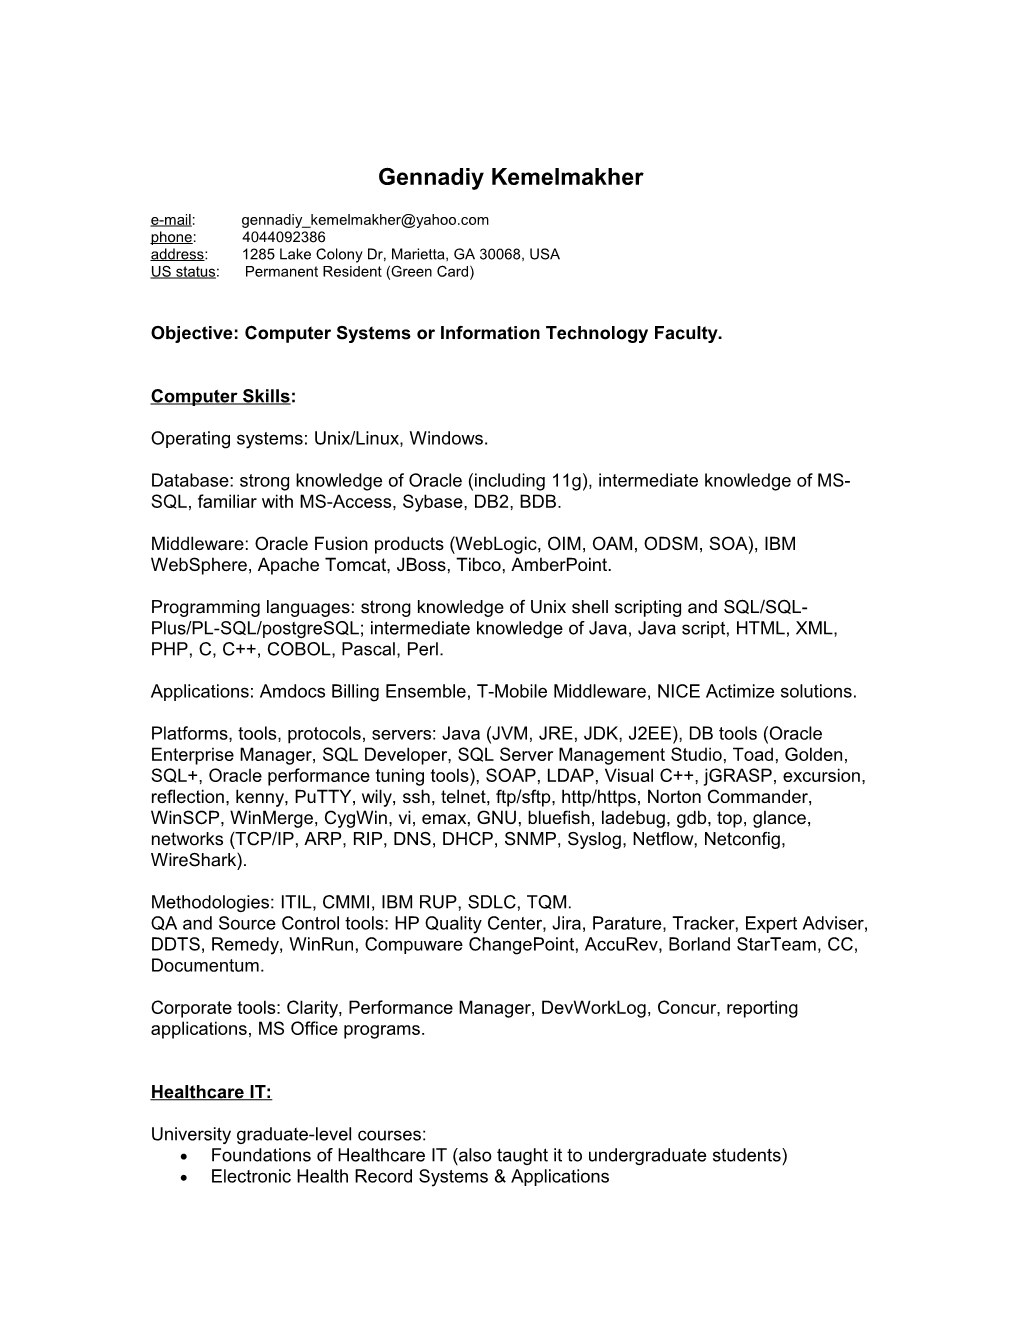 Resume Subject: Gennadiy Kemelmakher